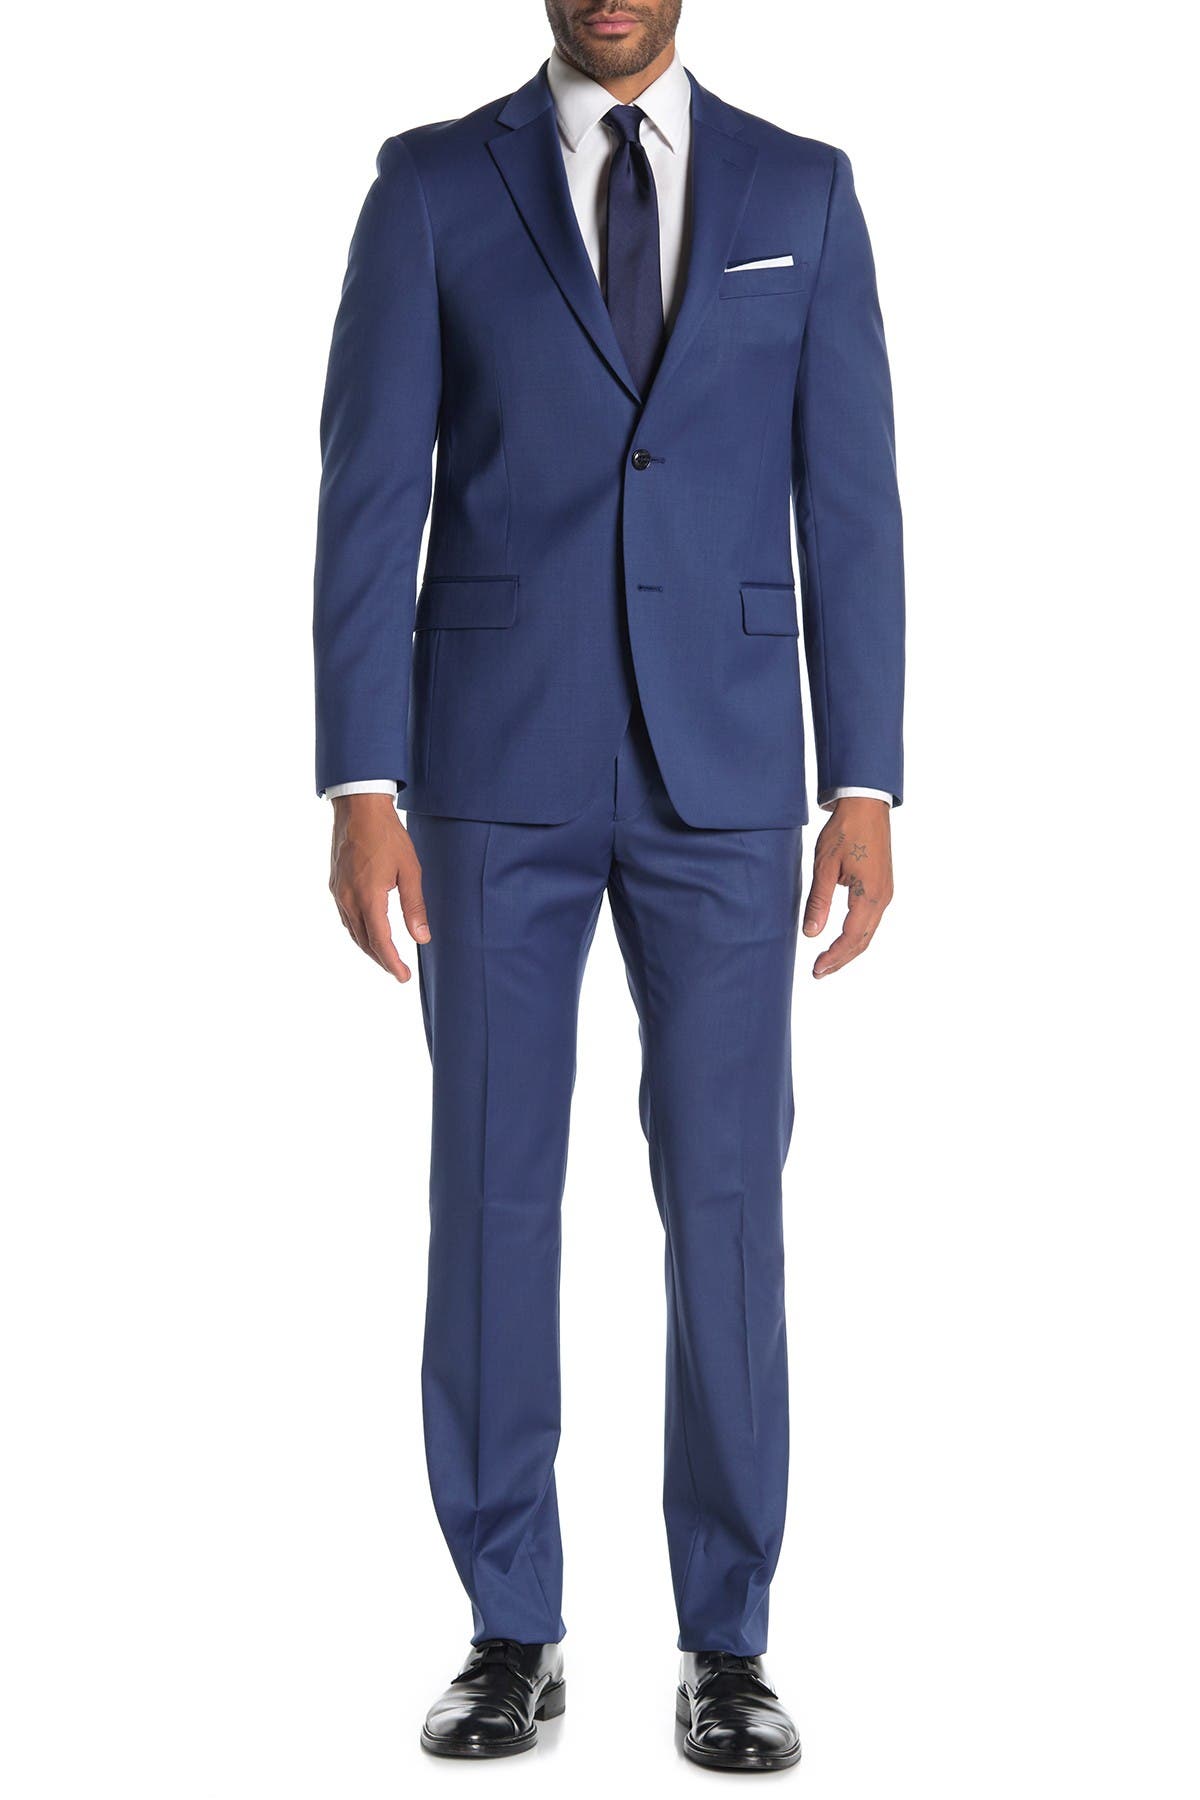 tommy hilfiger suit price